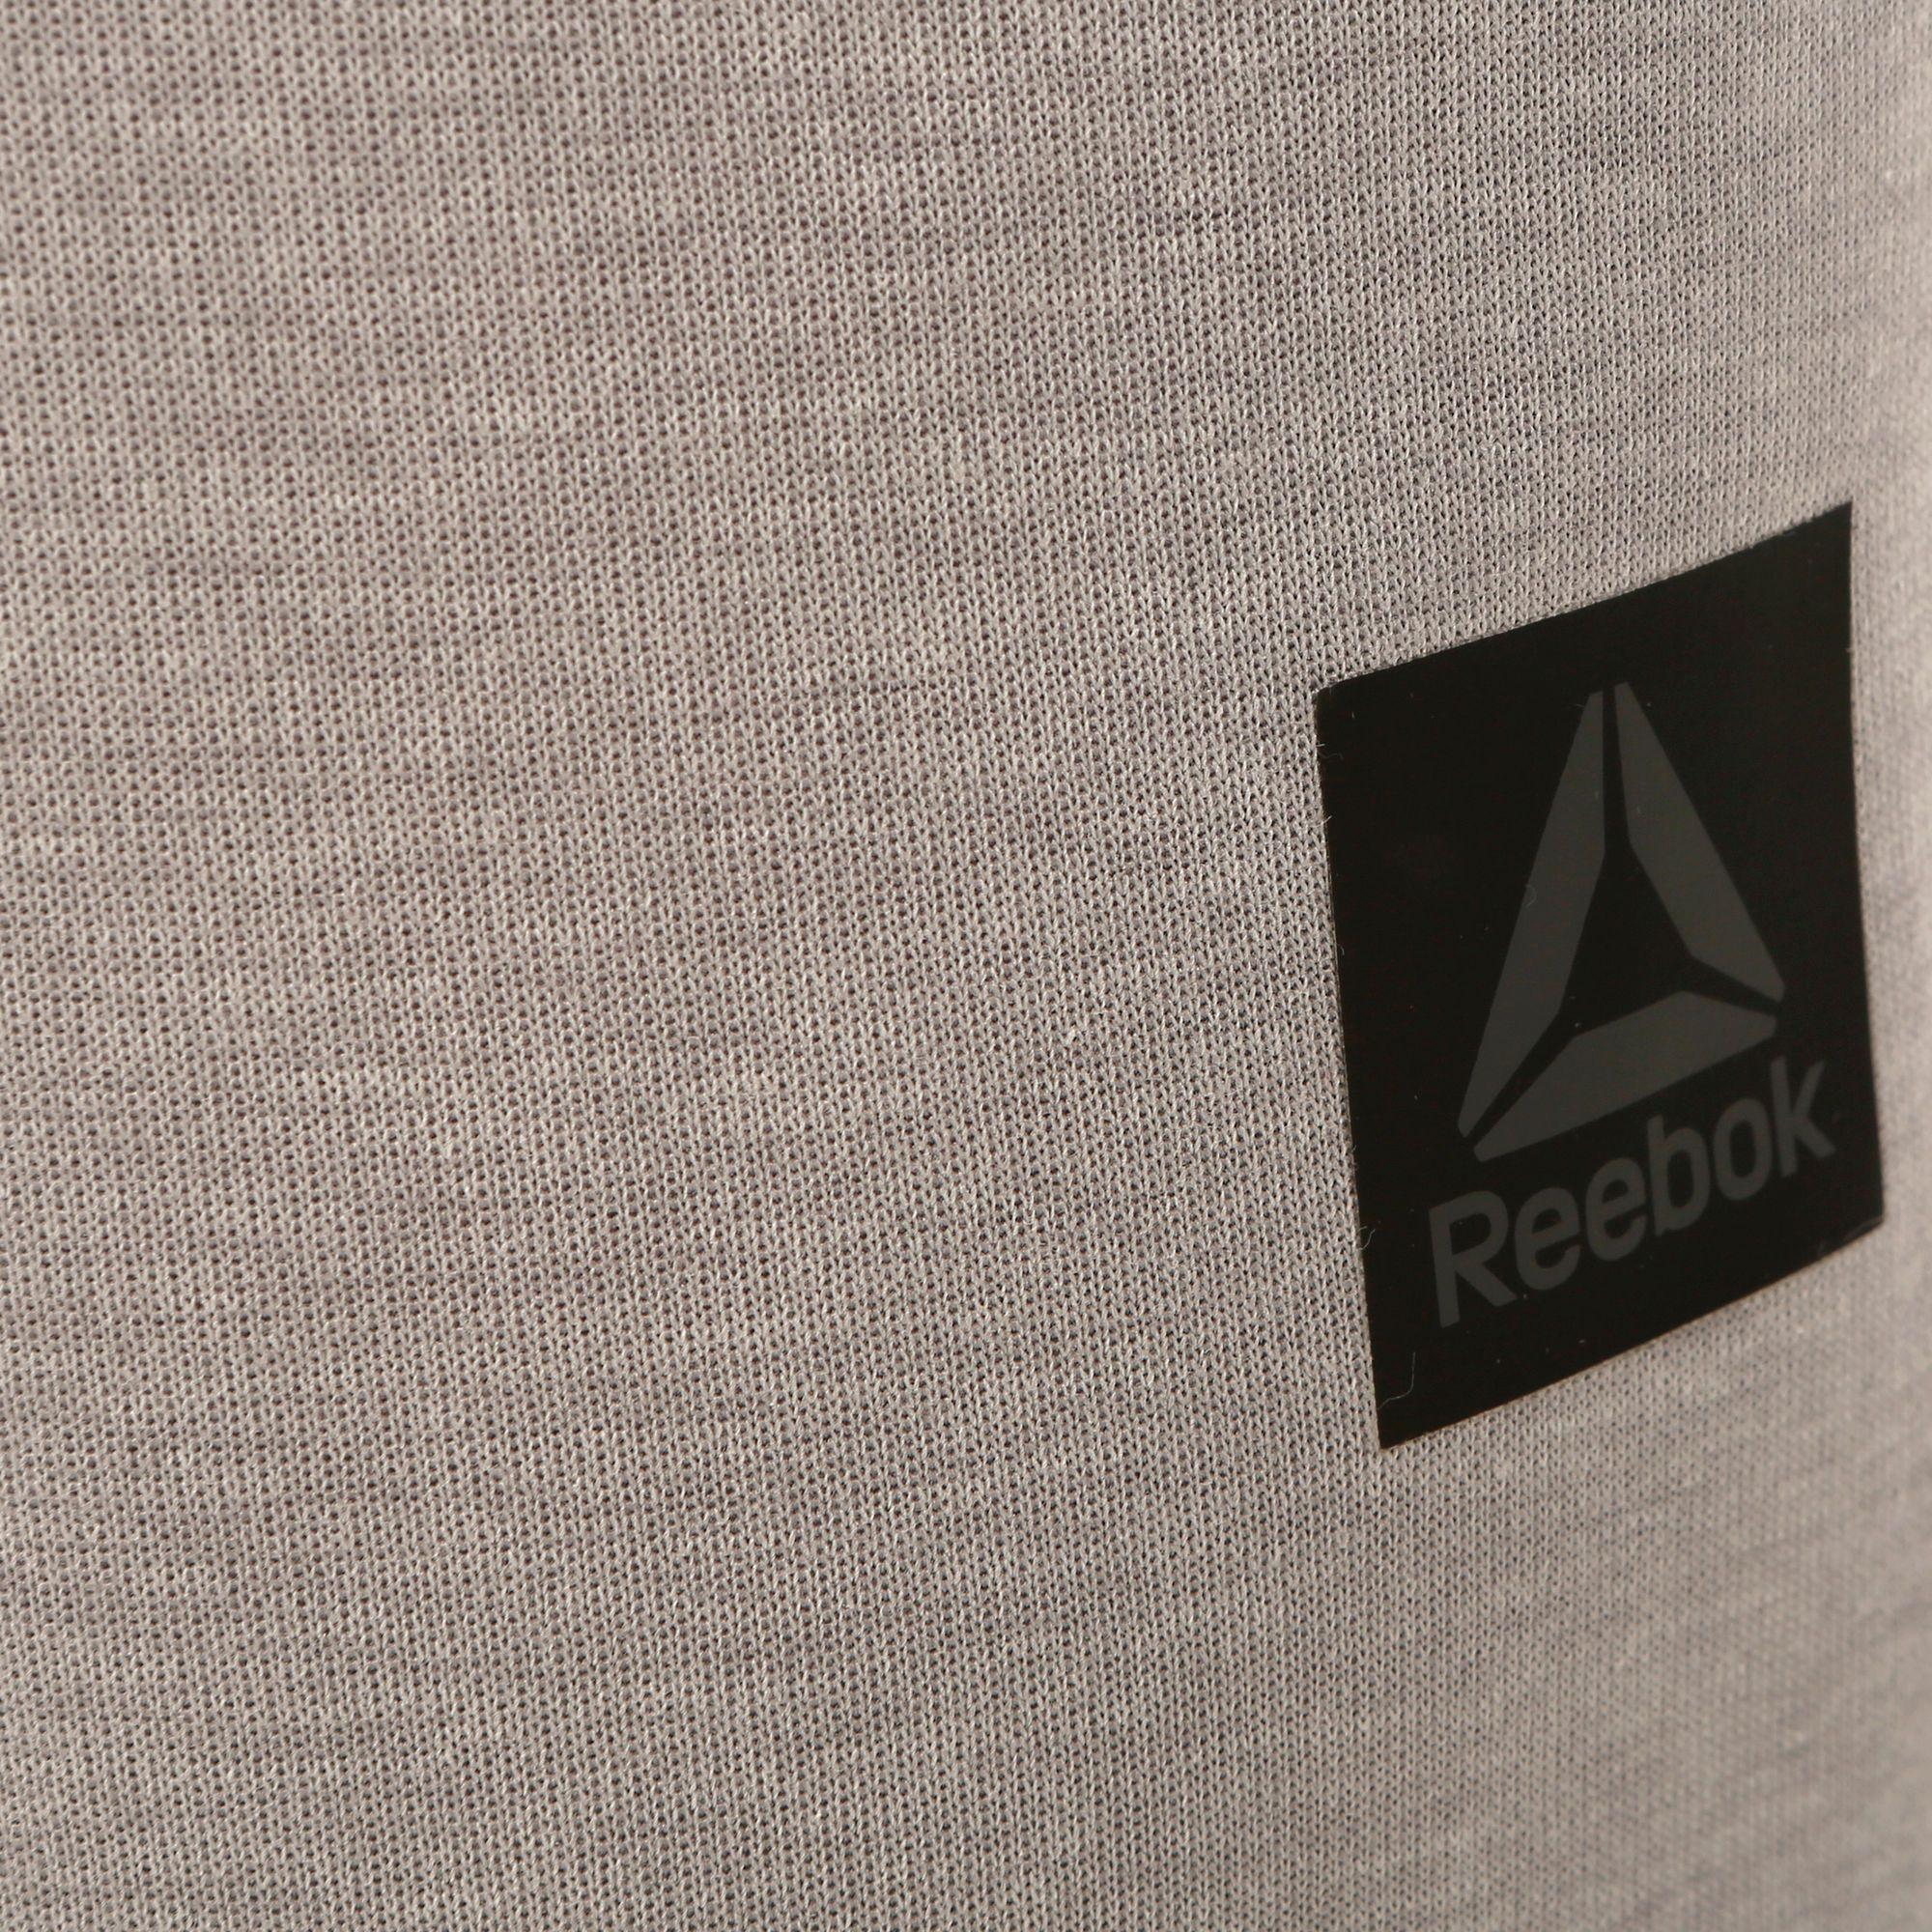 Reebok Supply Logo - buy Reebok Training Supply Knit Training Pants Men